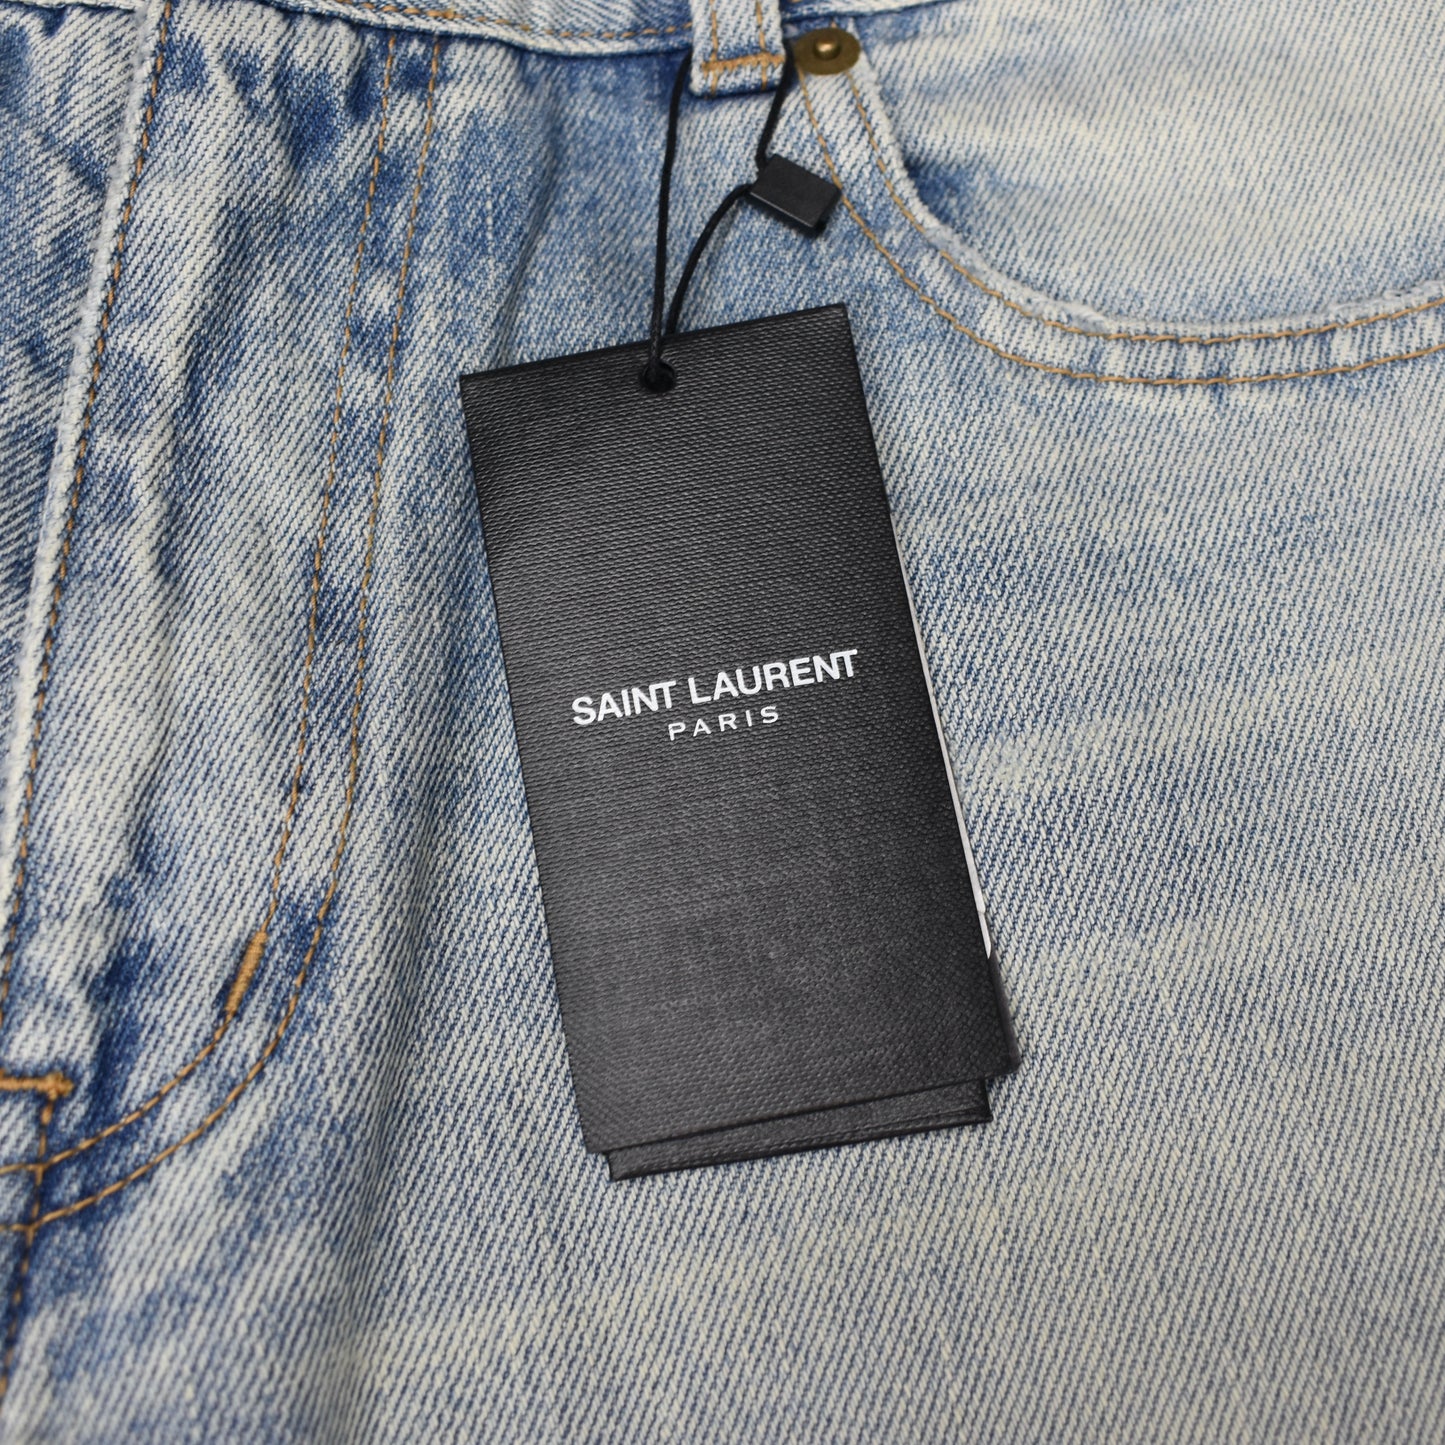 Saint Laurent - Made in Japan Distressed Blue Denim Carrot Jeans